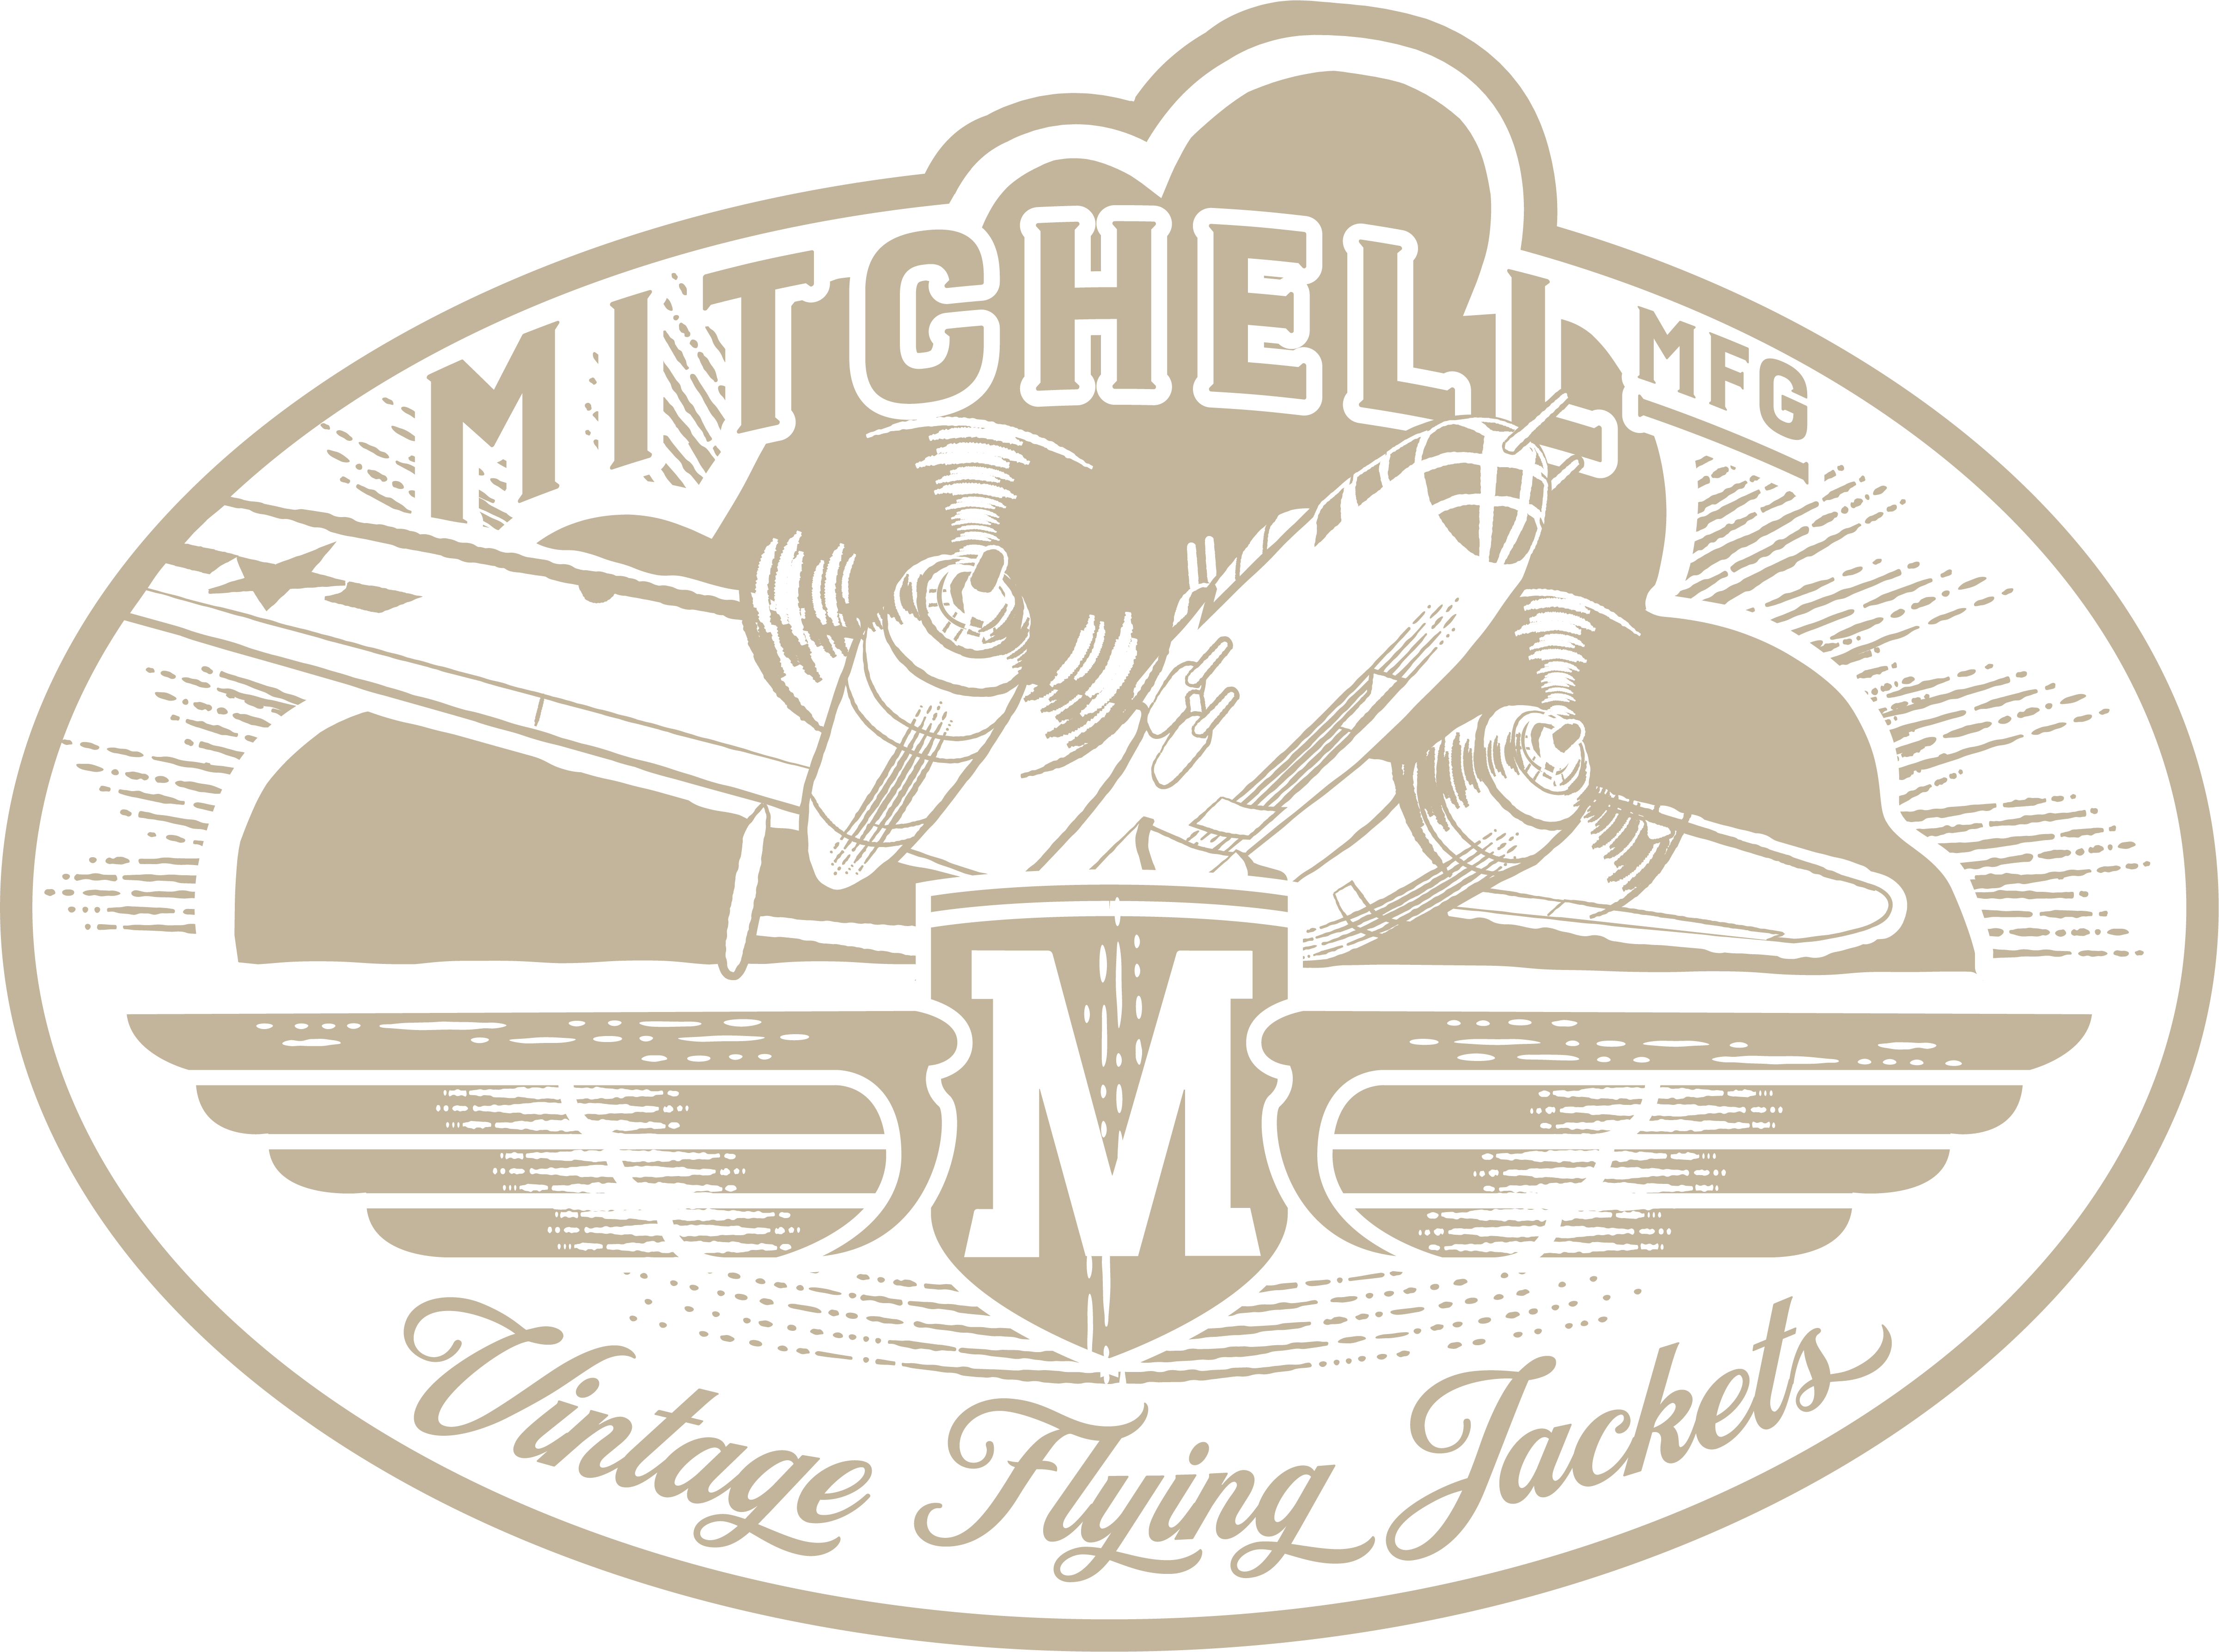 Mitchell Mfg Logo PMS4685 Tan